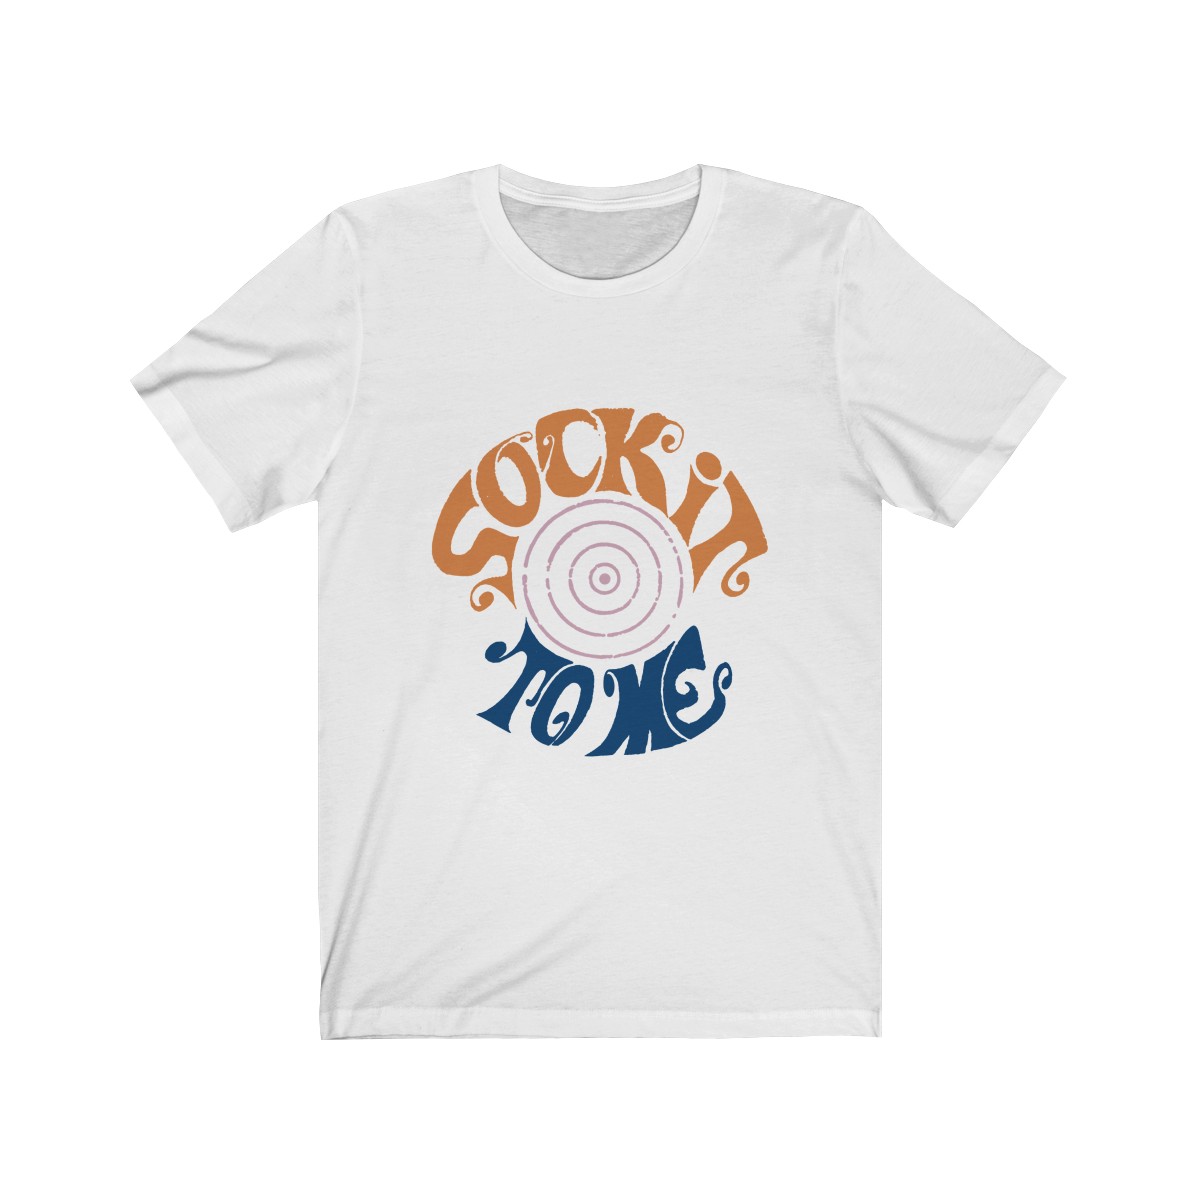  Sock It To Me, Tyler Durden-Fight Club T-shirt-Light